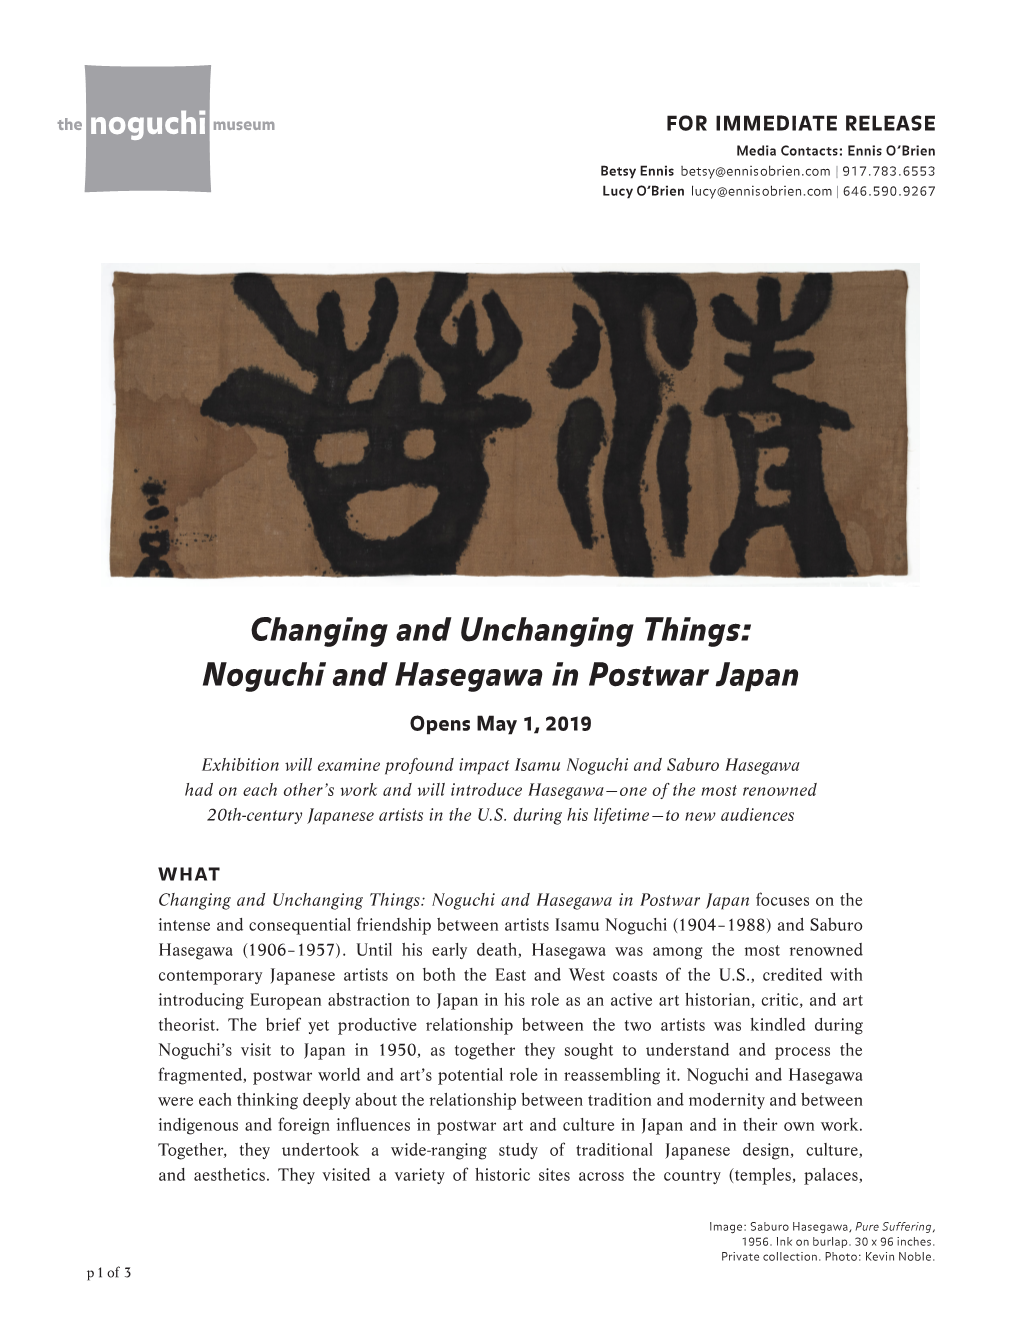 Changing and Unchanging Things: Noguchi and Hasegawa in Postwar Japan